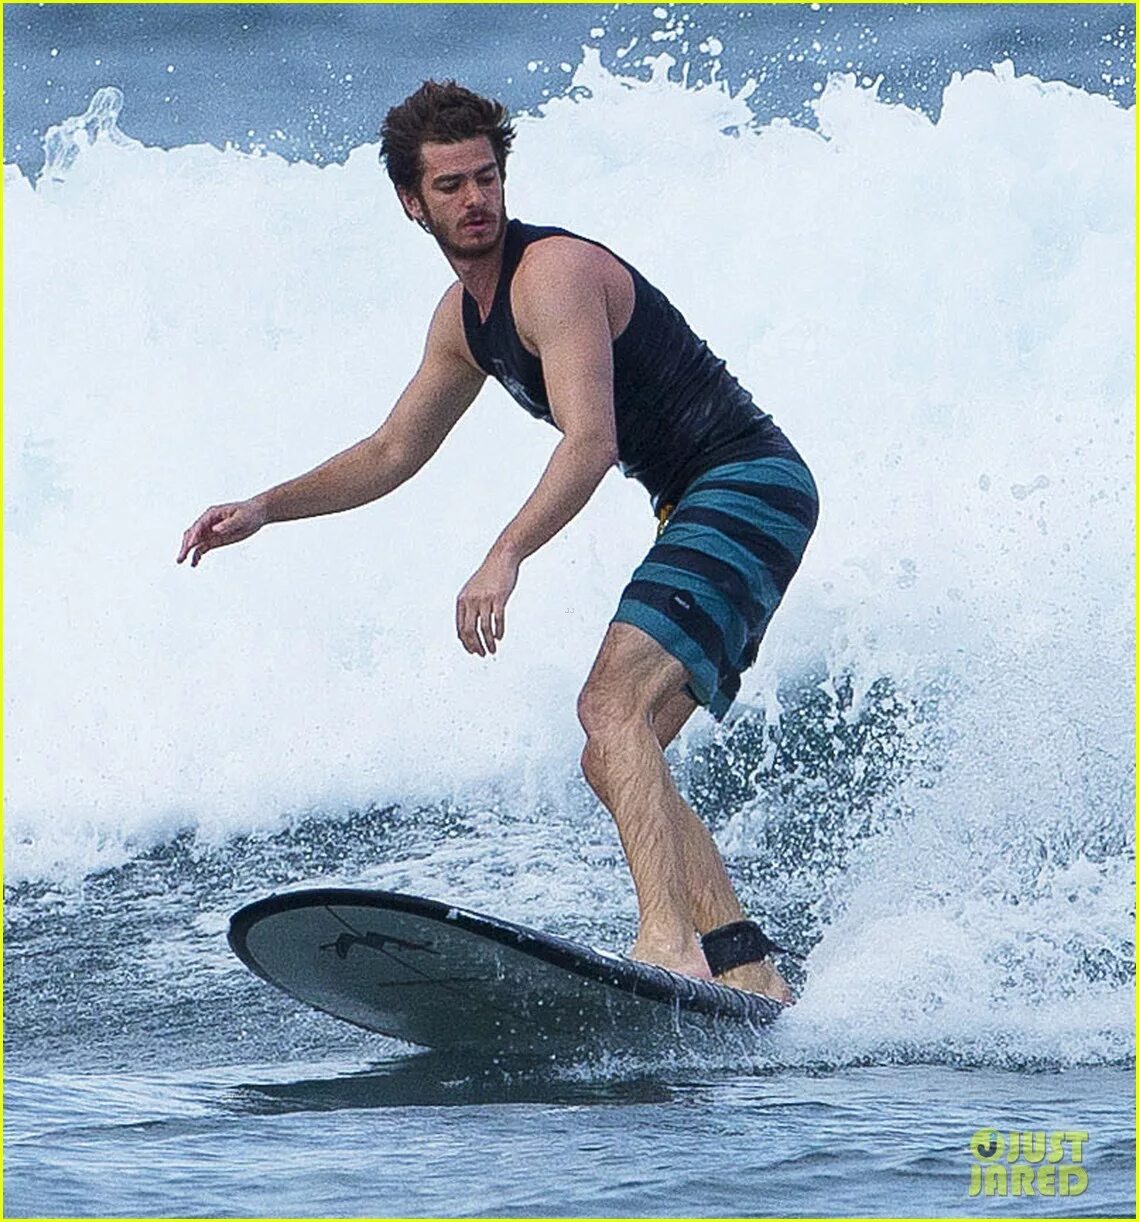 Andre stone. Эндрю Гарфилд серфинг. Энди Стоун. Эндрю Гарфилд серфинг фото. Andrew Garfield in Beach advertisement.